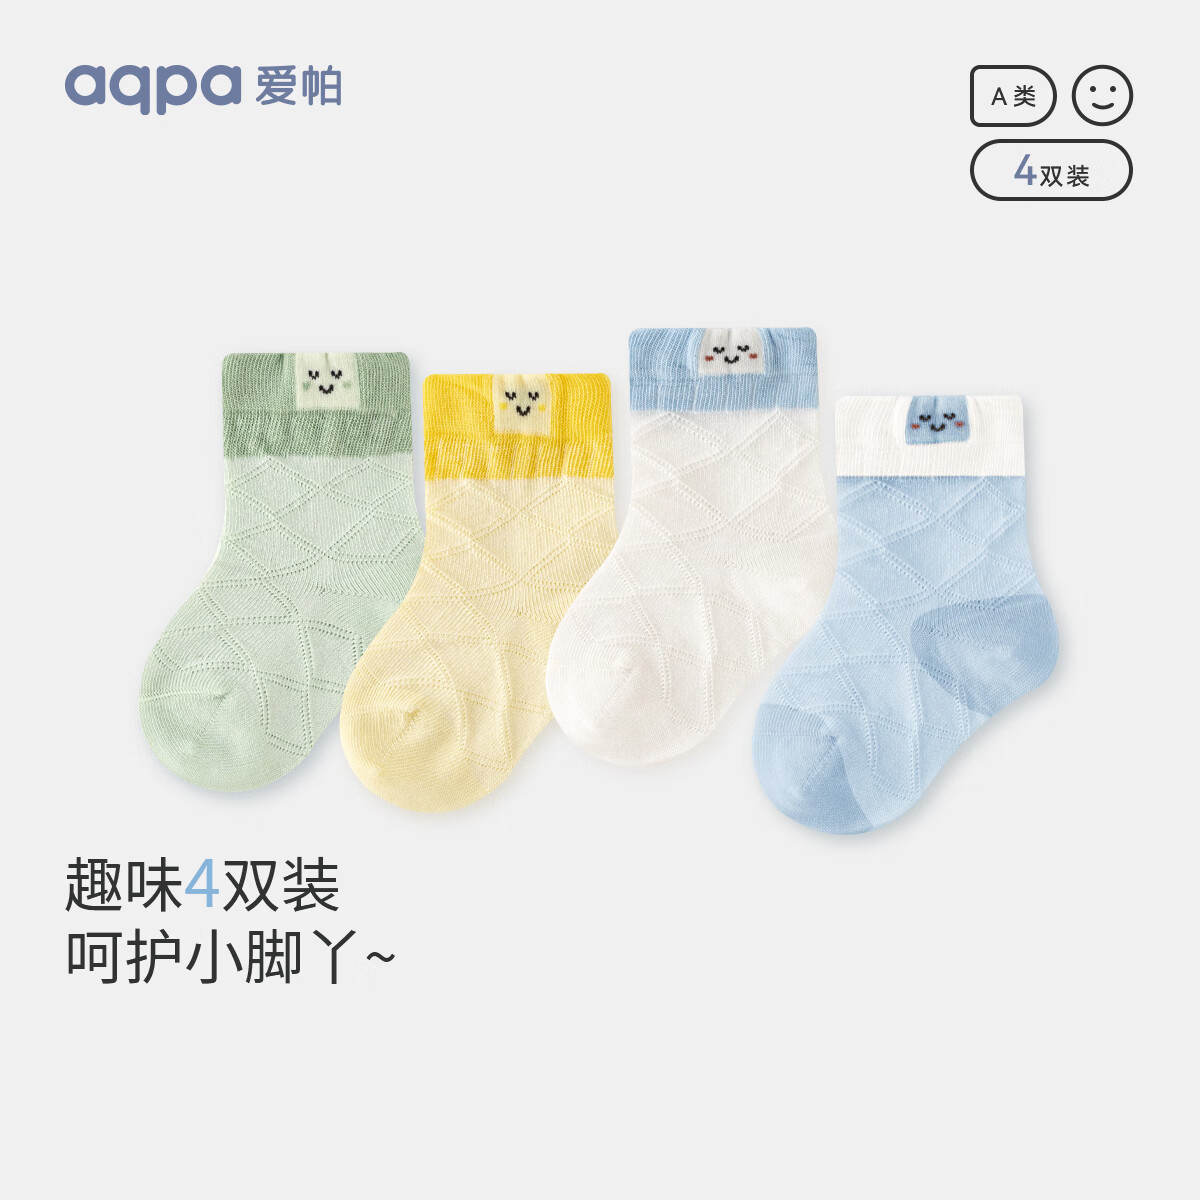 aqpa 婴儿袜子夏季透气棉质宝宝袜子 4双装 0到6岁 券后24.81元